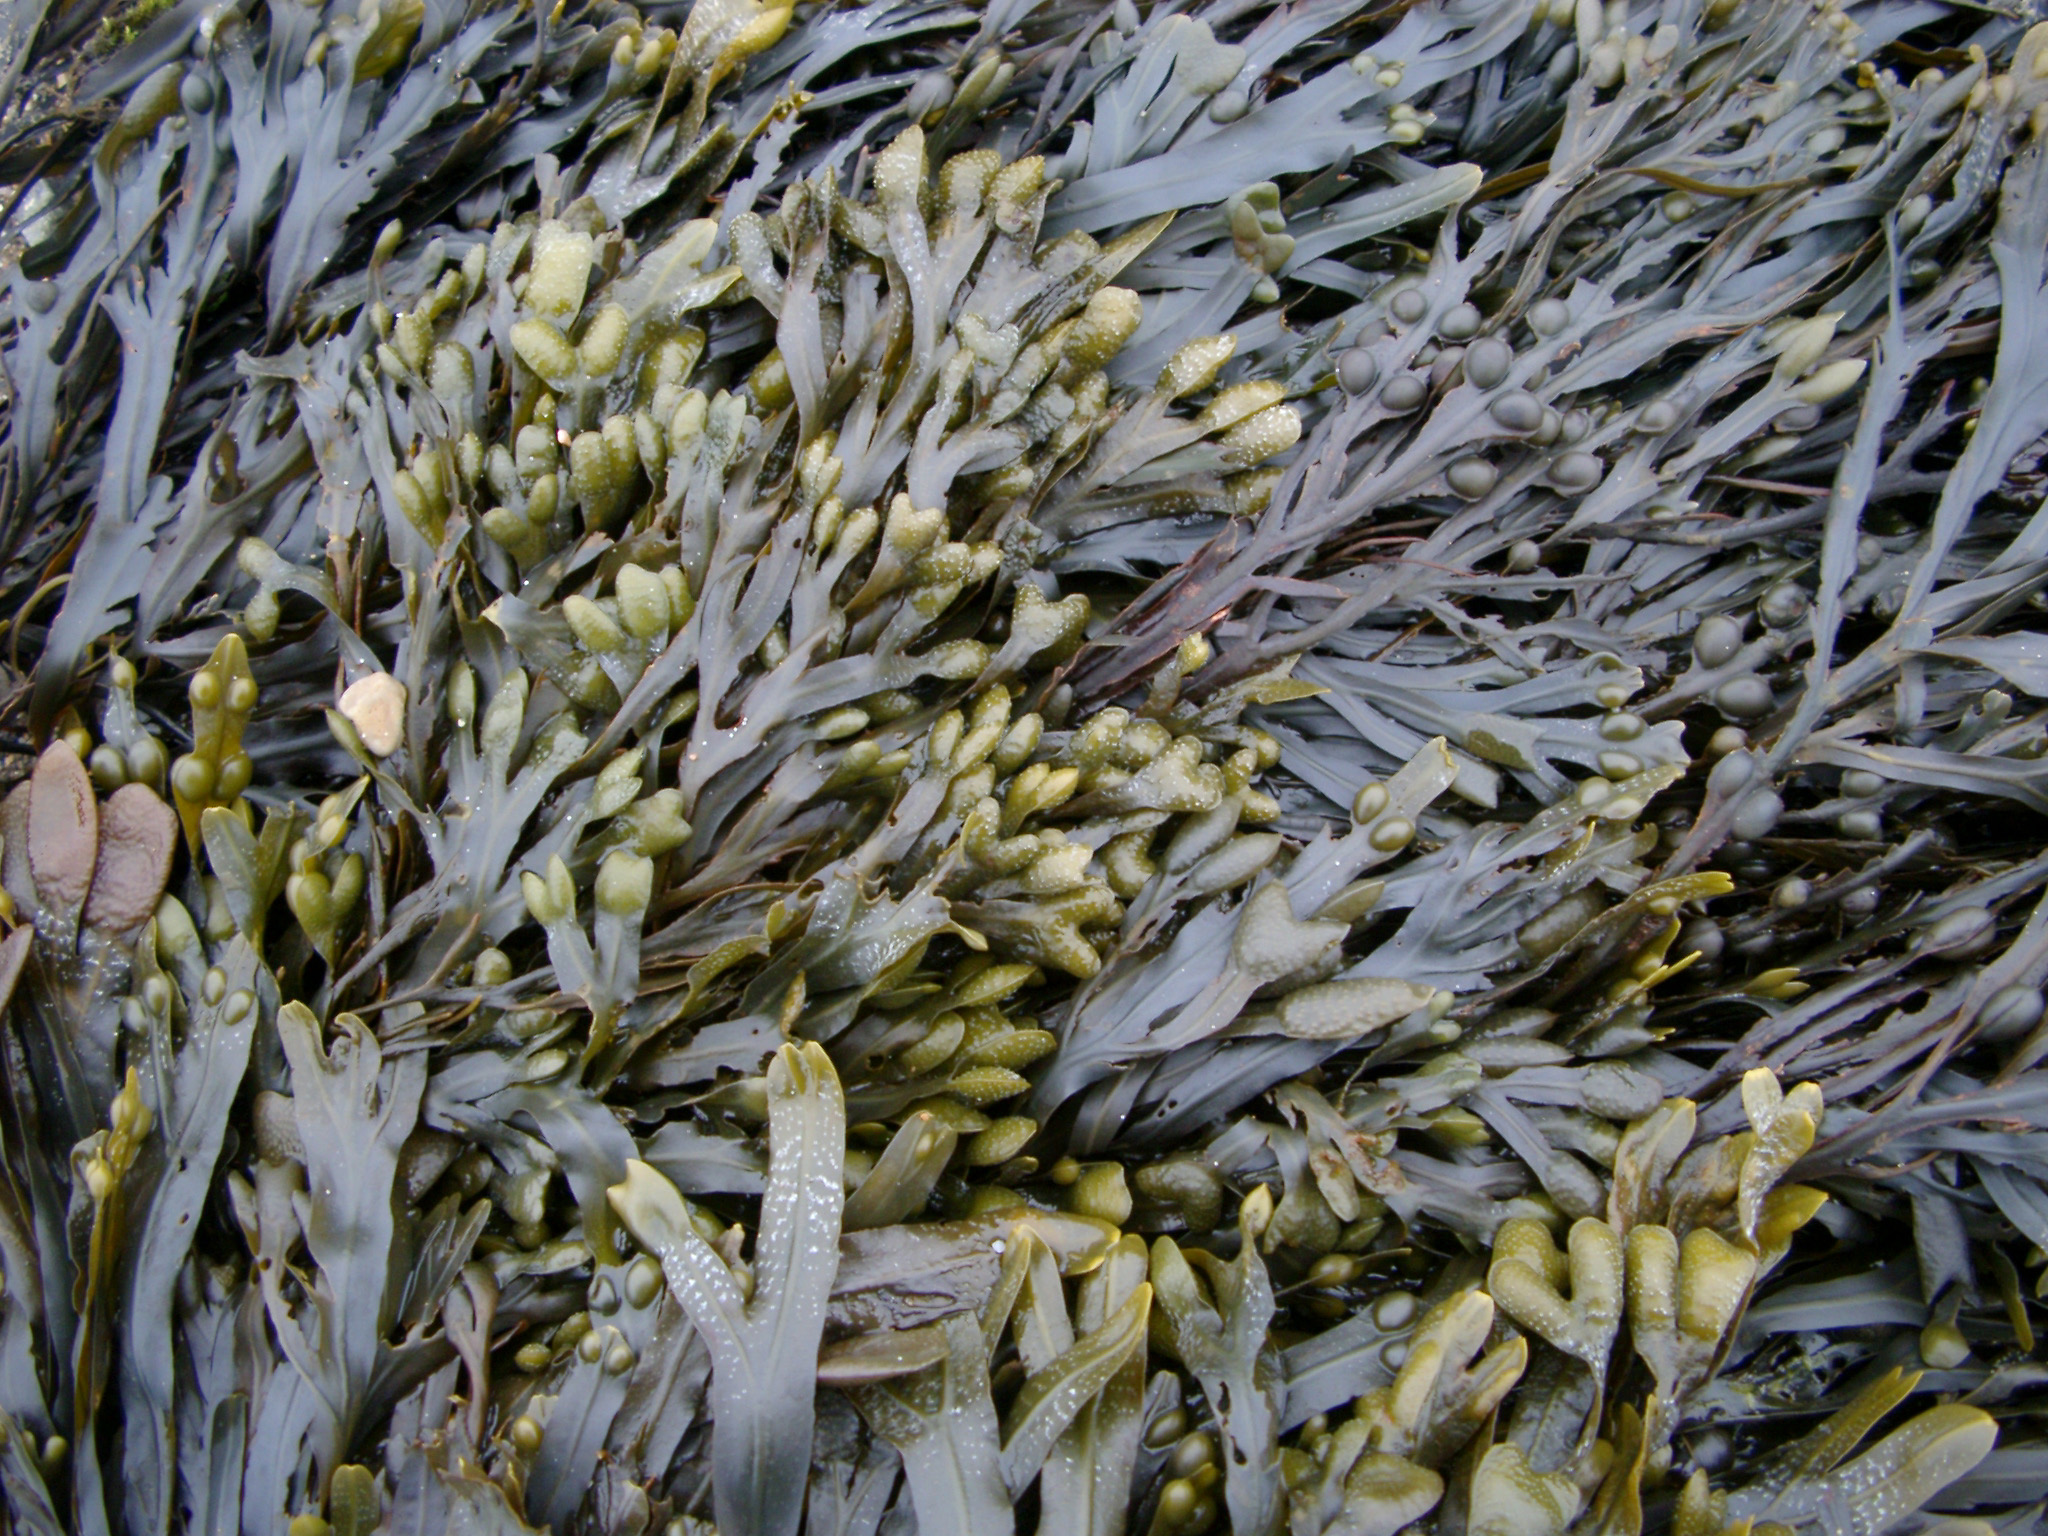 pic of seaweed